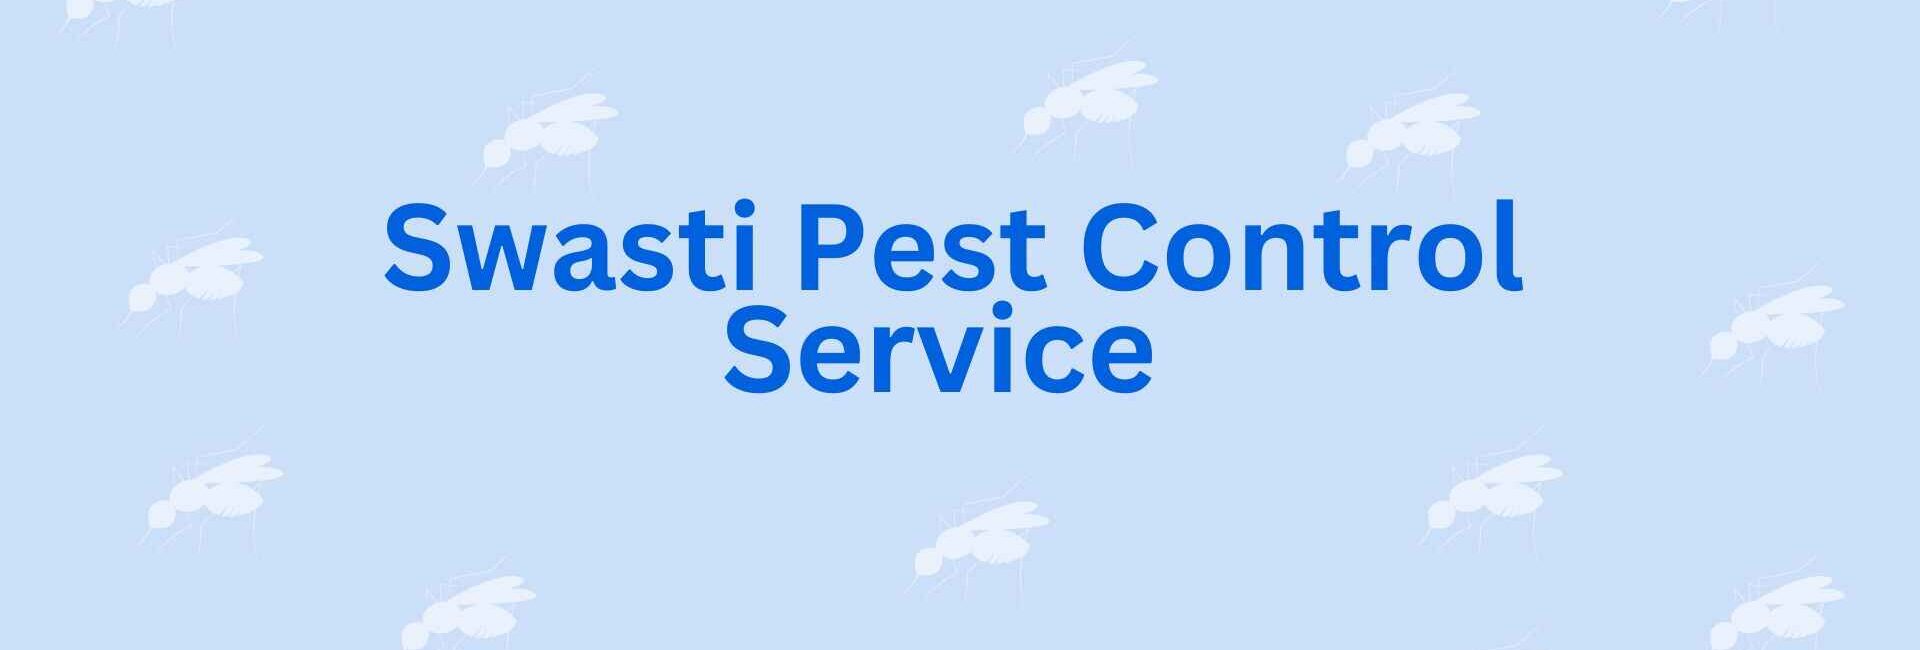 Swasti Pest Control Service - Best Pest Control Expert Service in Noida